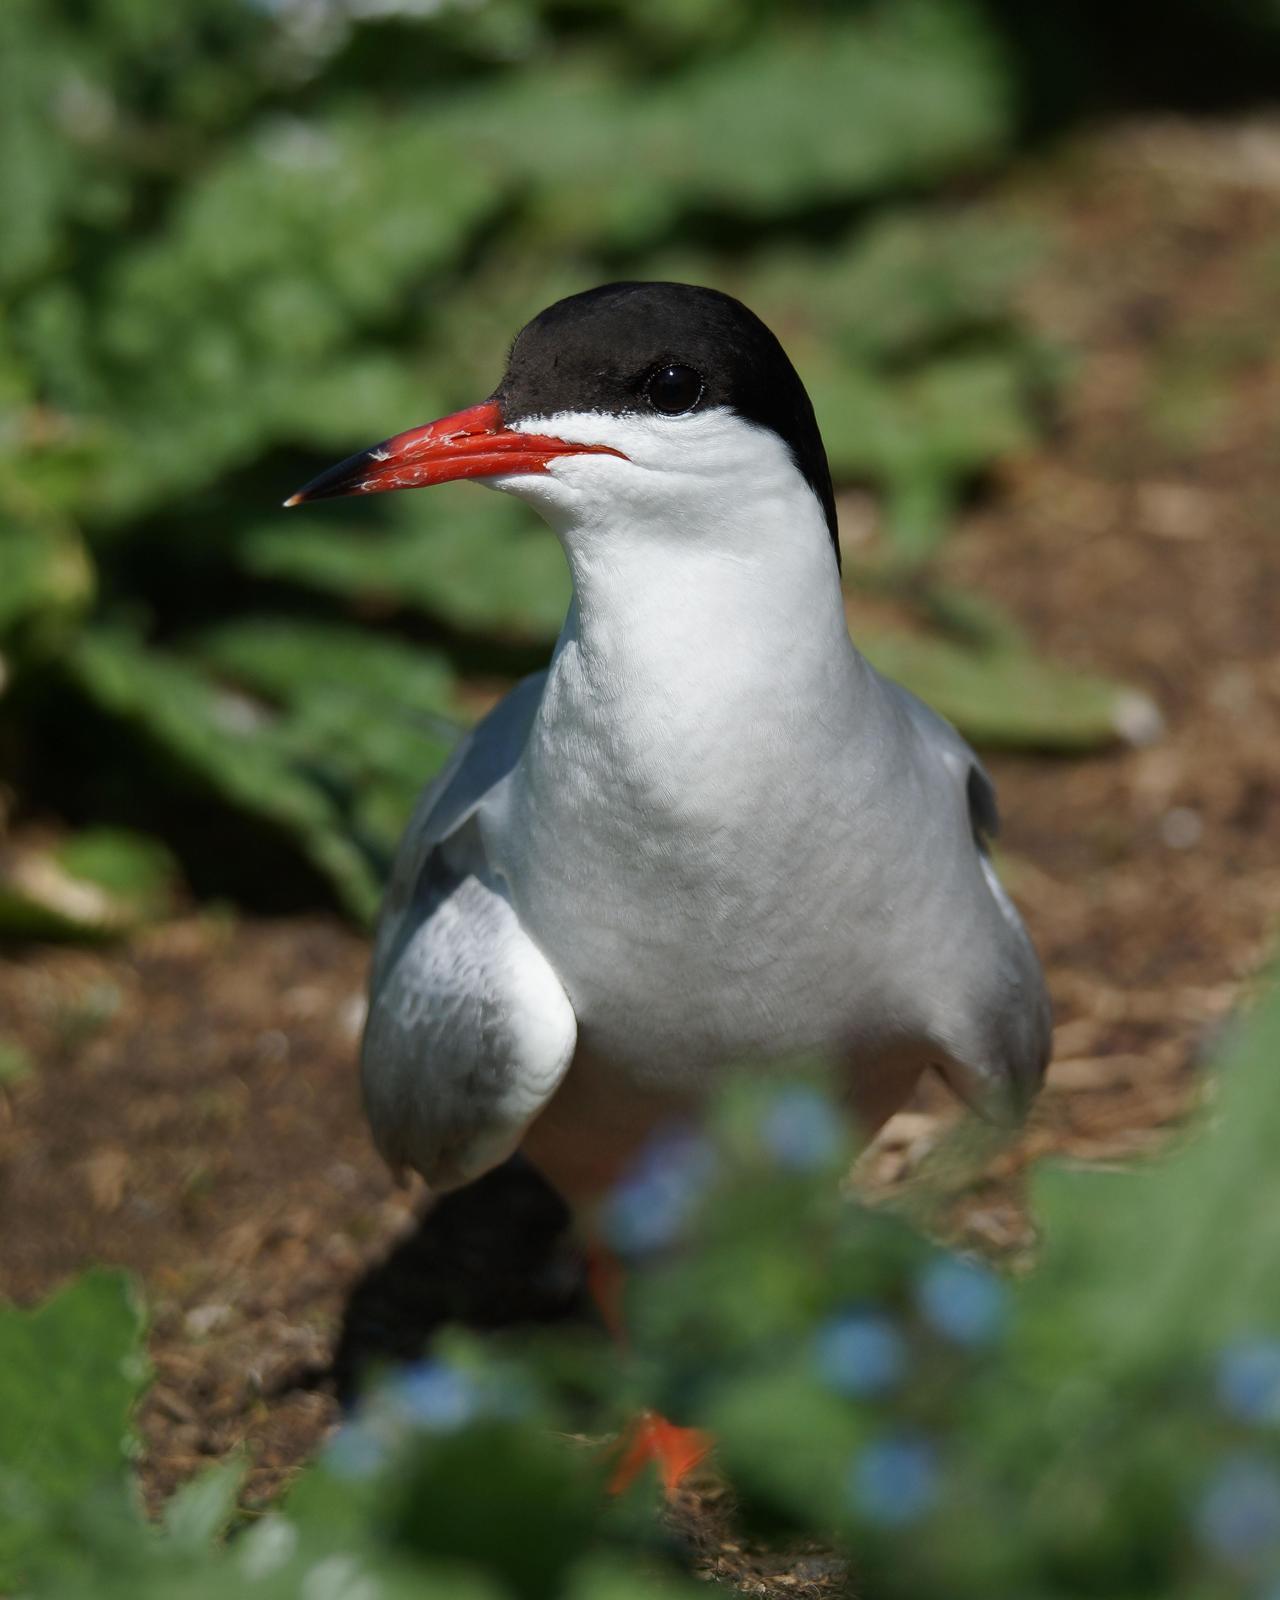 Common Tern Photo by Steve Percival